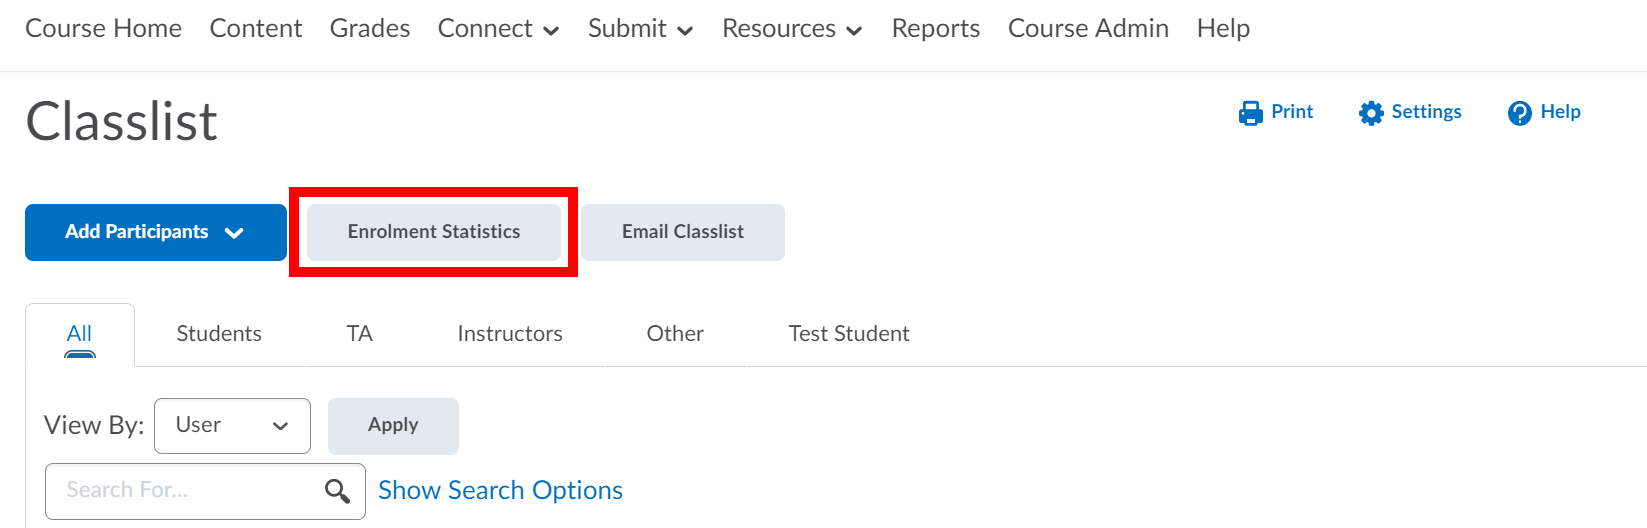 'Enrolment Statistics' button highlighted on Classlist page